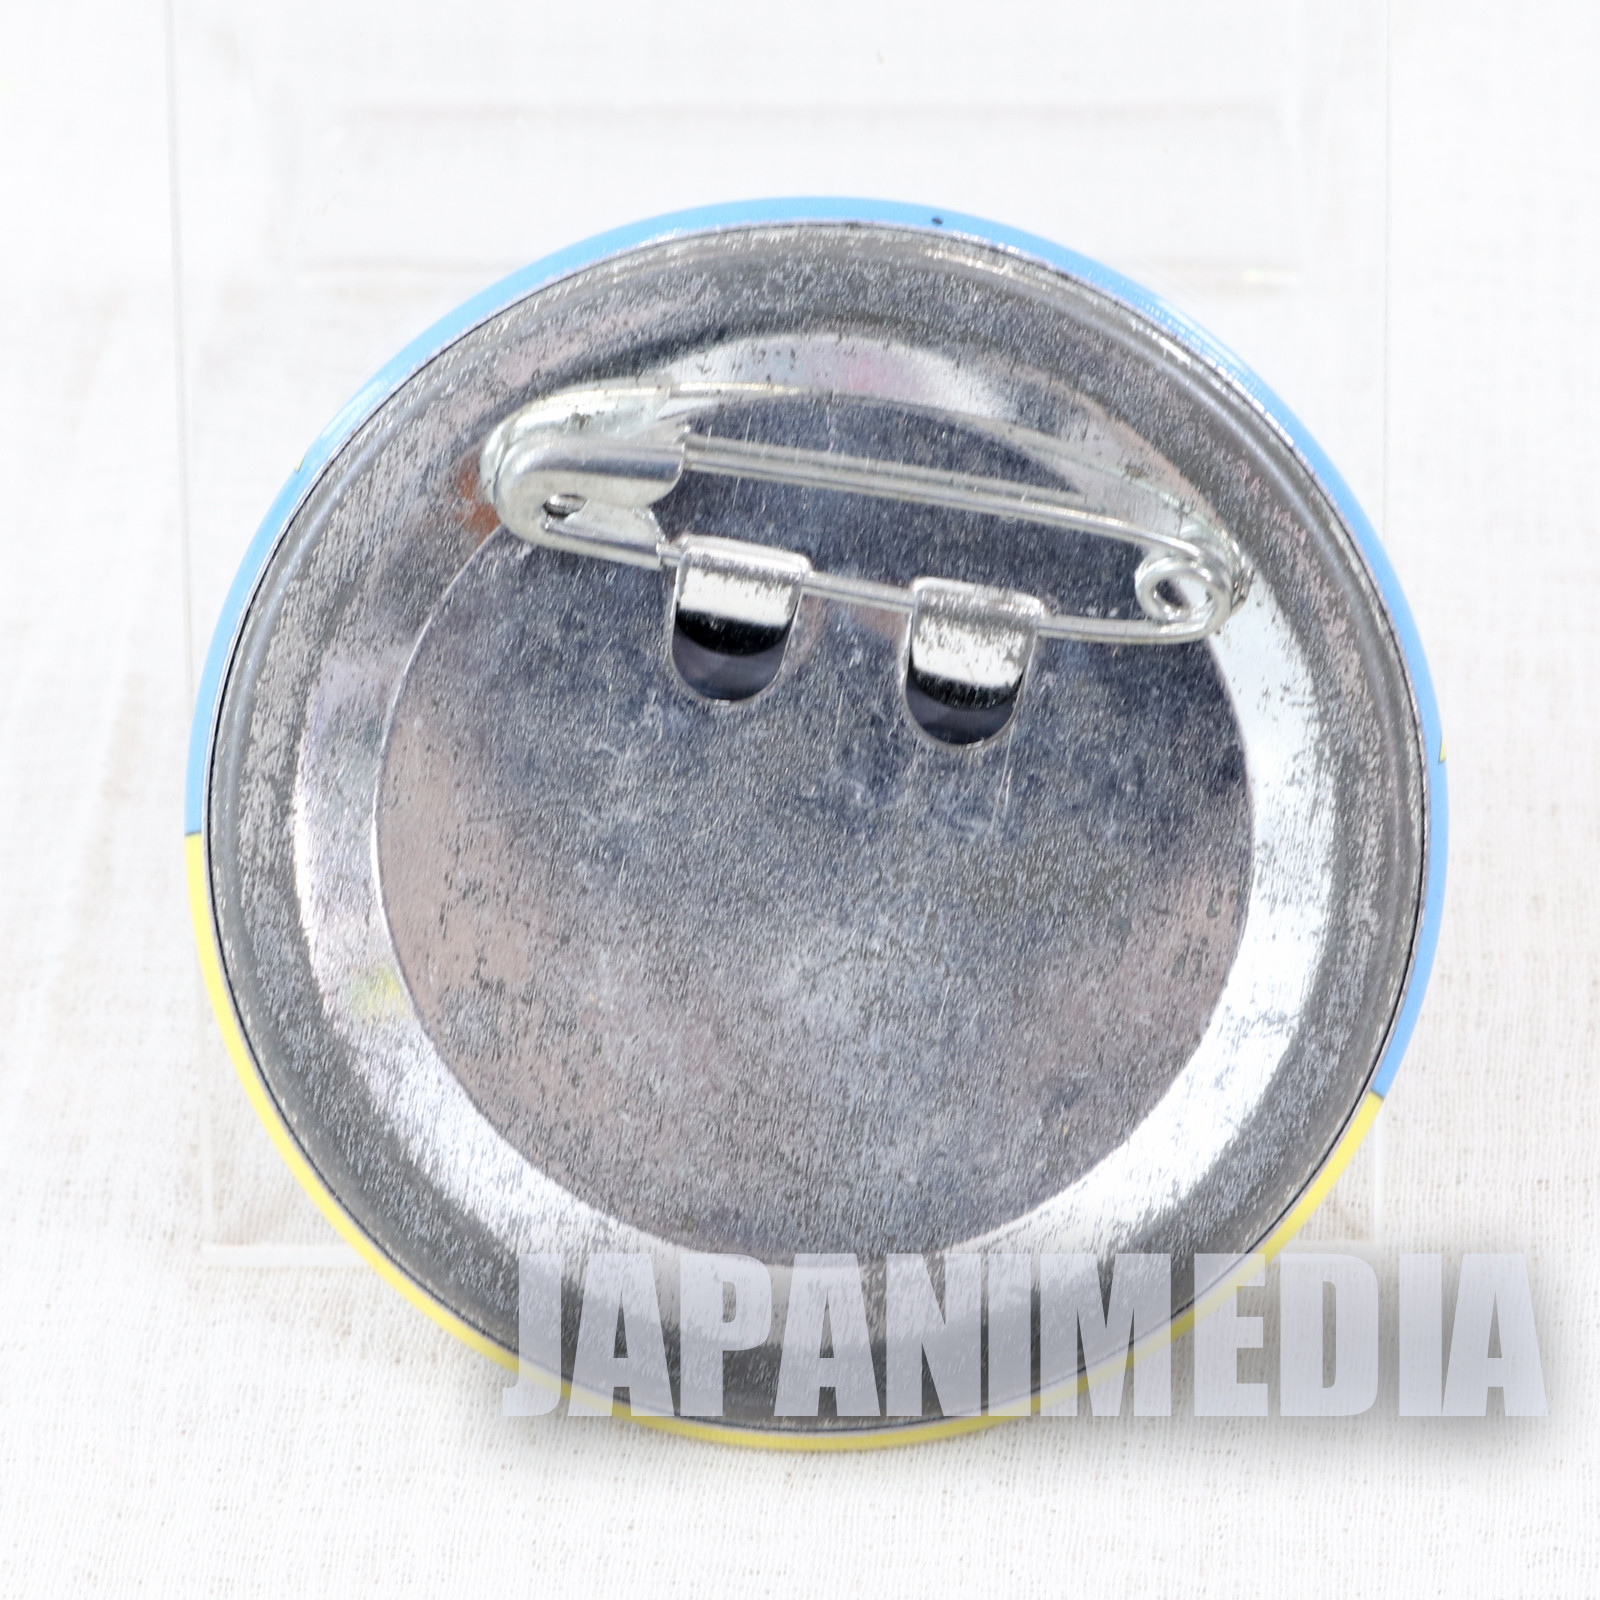 Retro Arabian Dream Scheherazade Button badge JAPAN NES Famicom